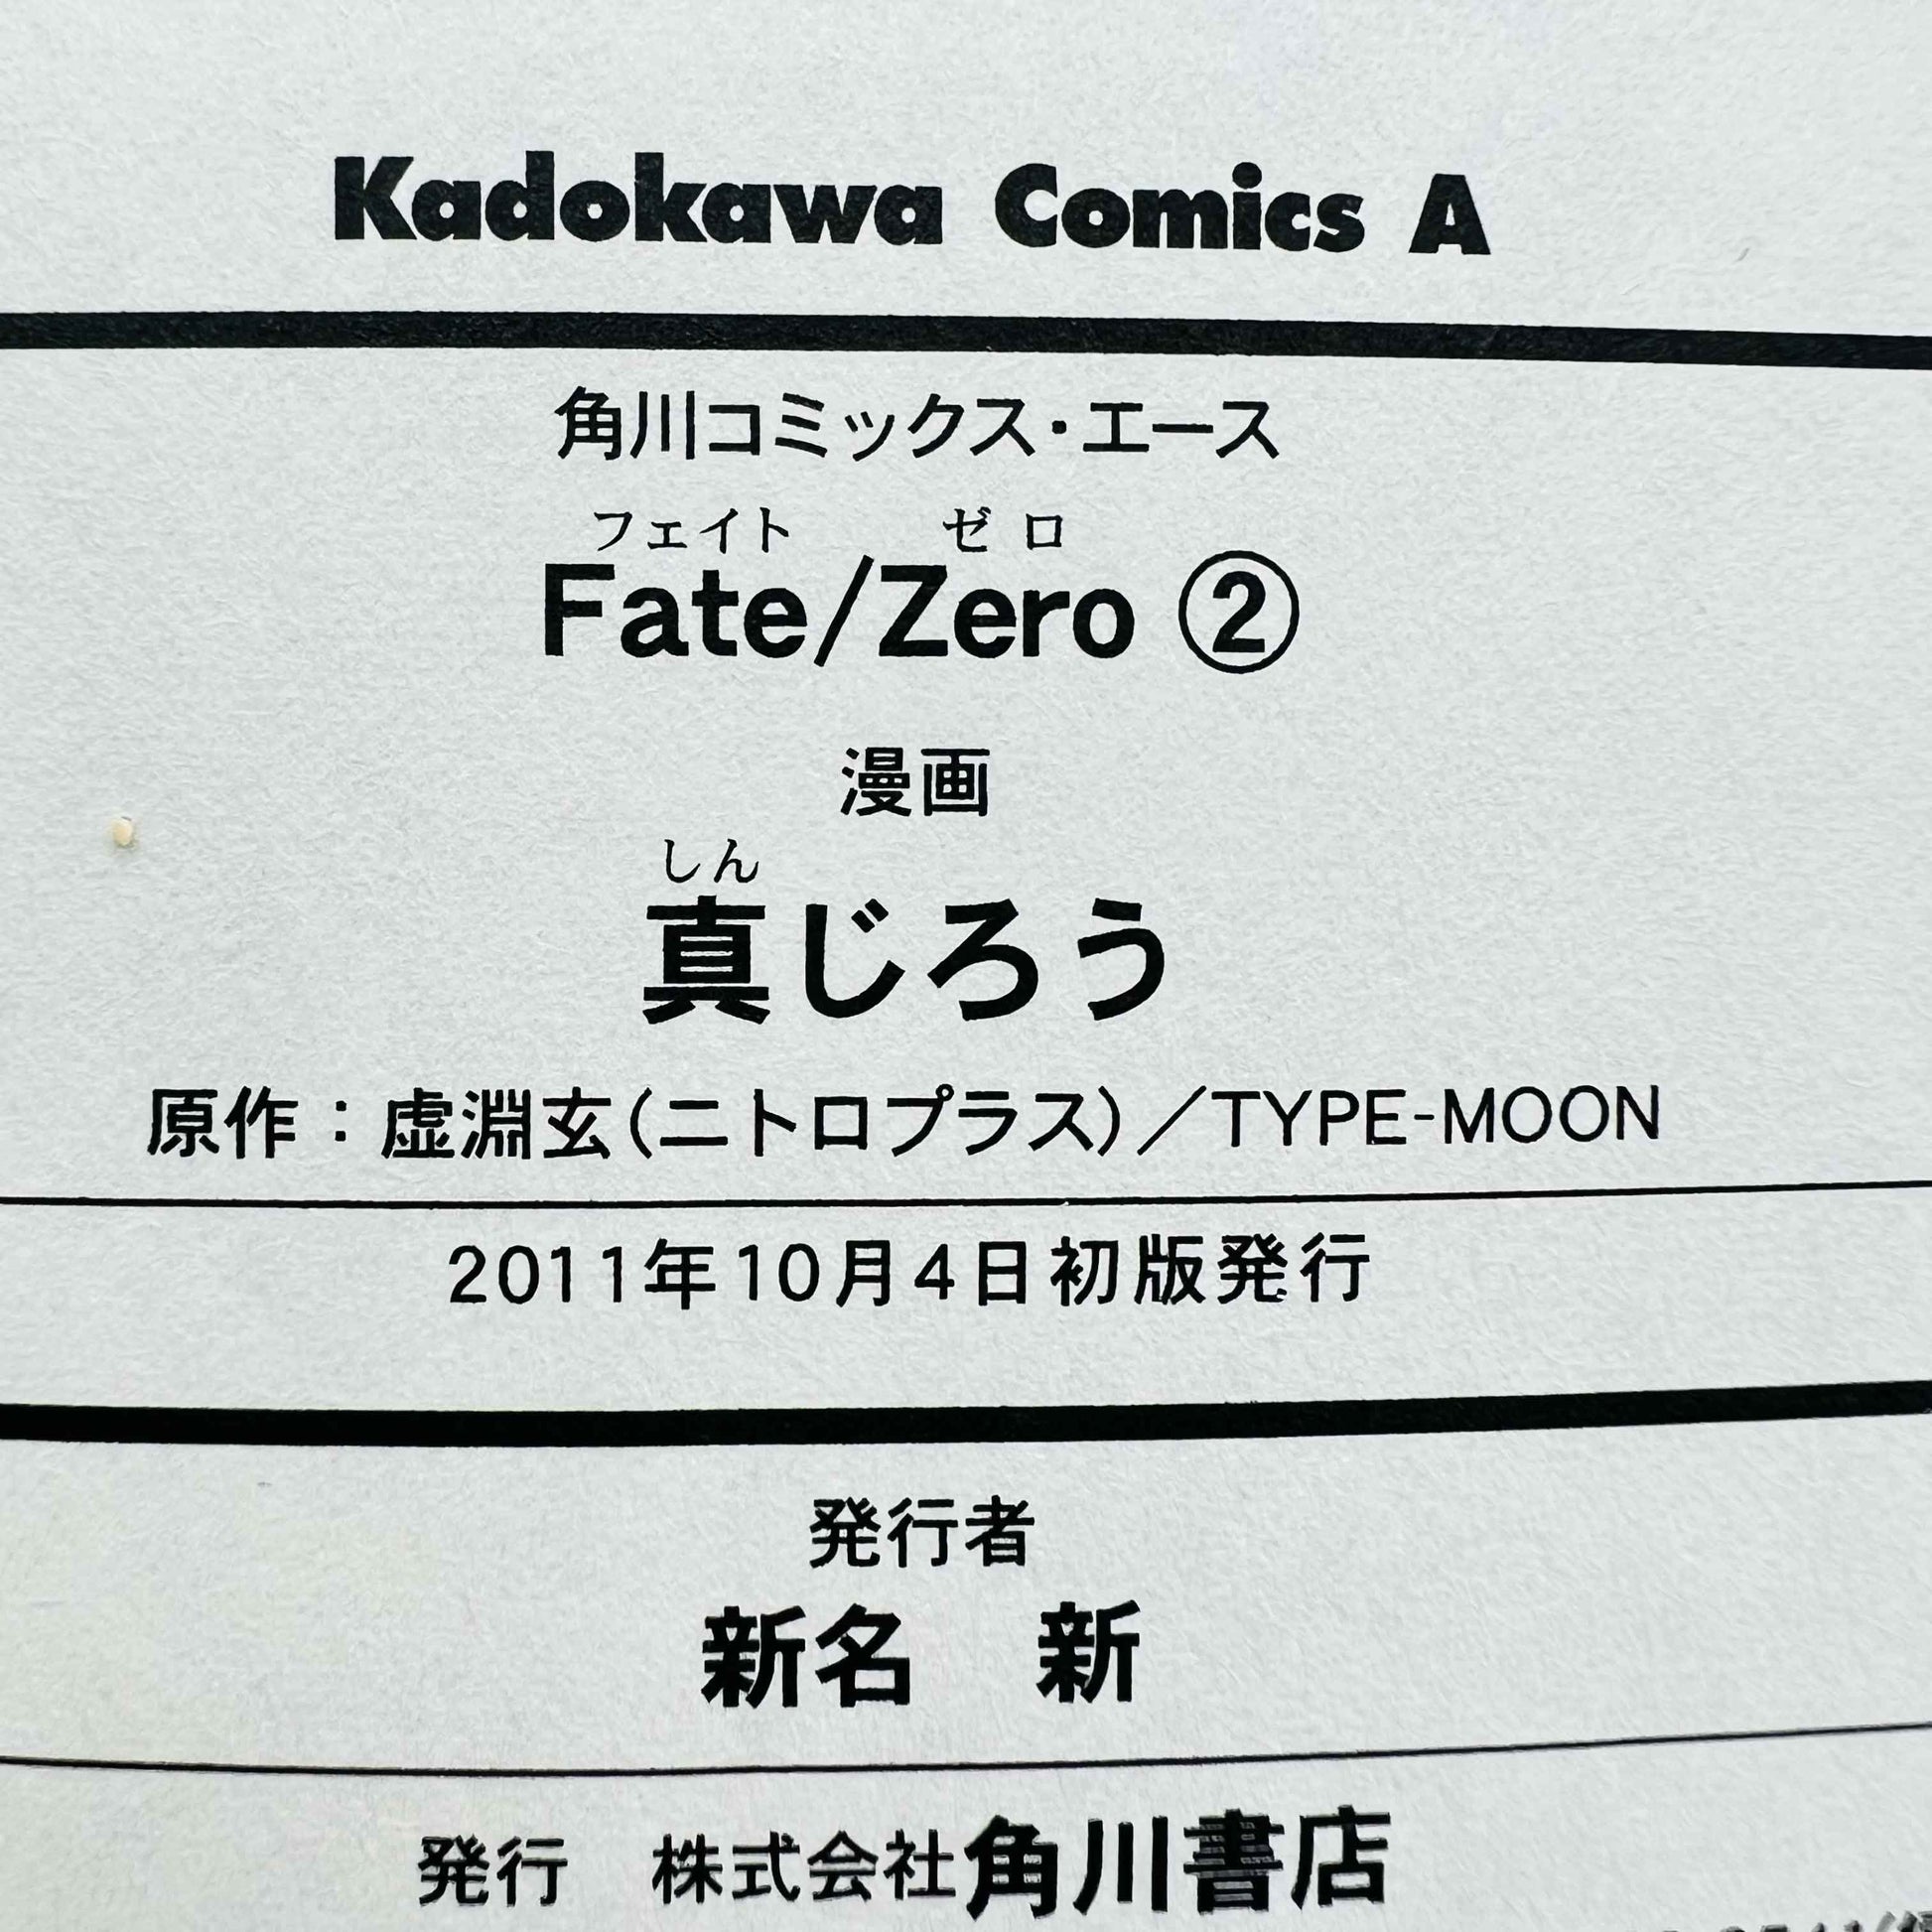 Fate / Zero - Volume 01 02 03 Limited Edition - 1stPrint.net - 1st First Print Edition Manga Store - M-FATE-LOT-001